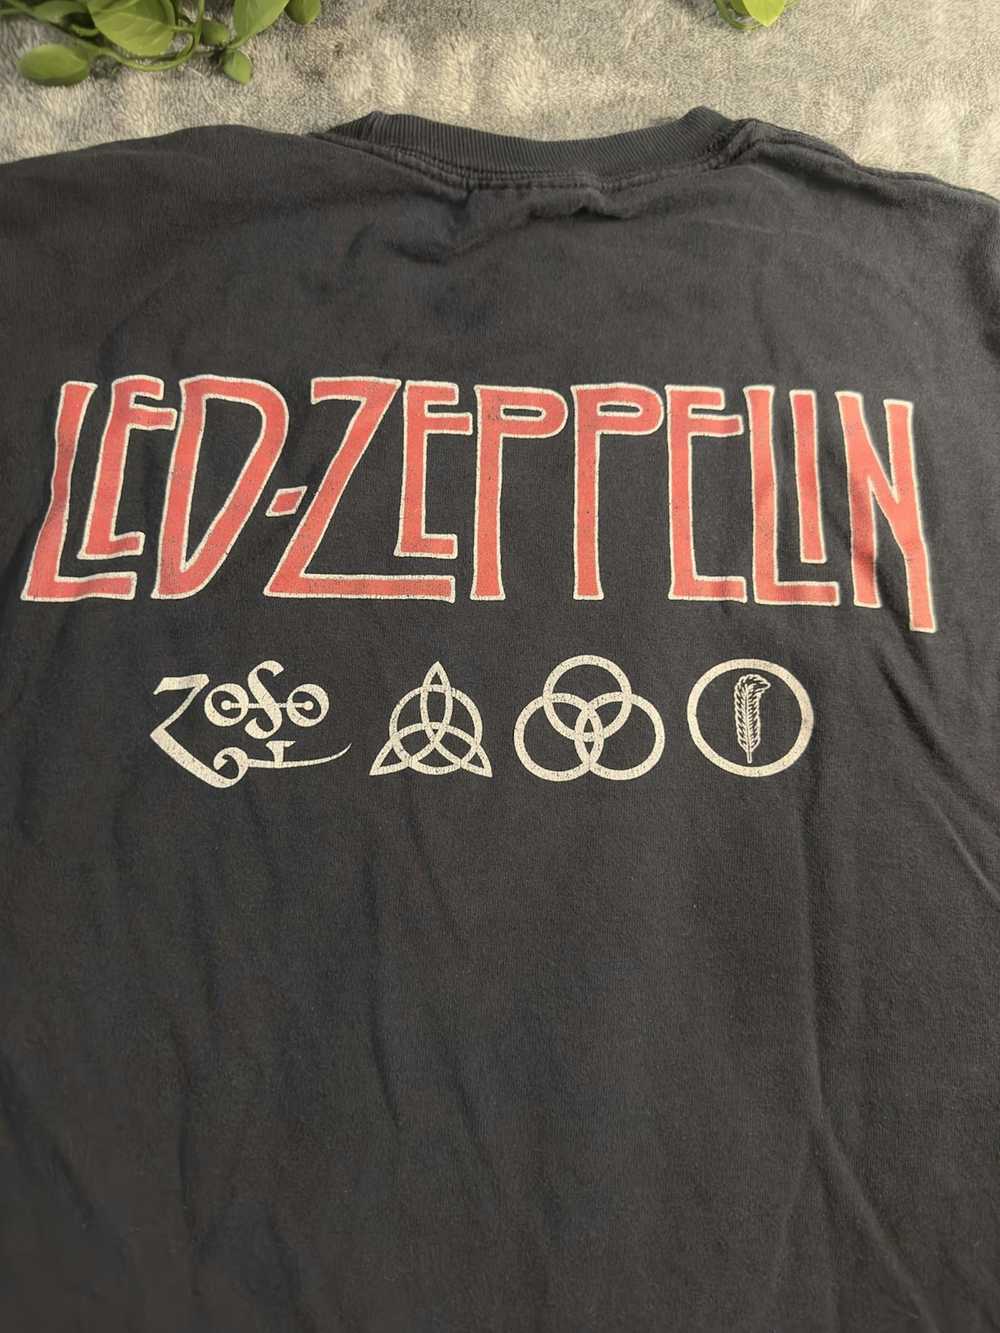 Led Zeppelin × Vintage Led Zeppelin T-shirt - image 4